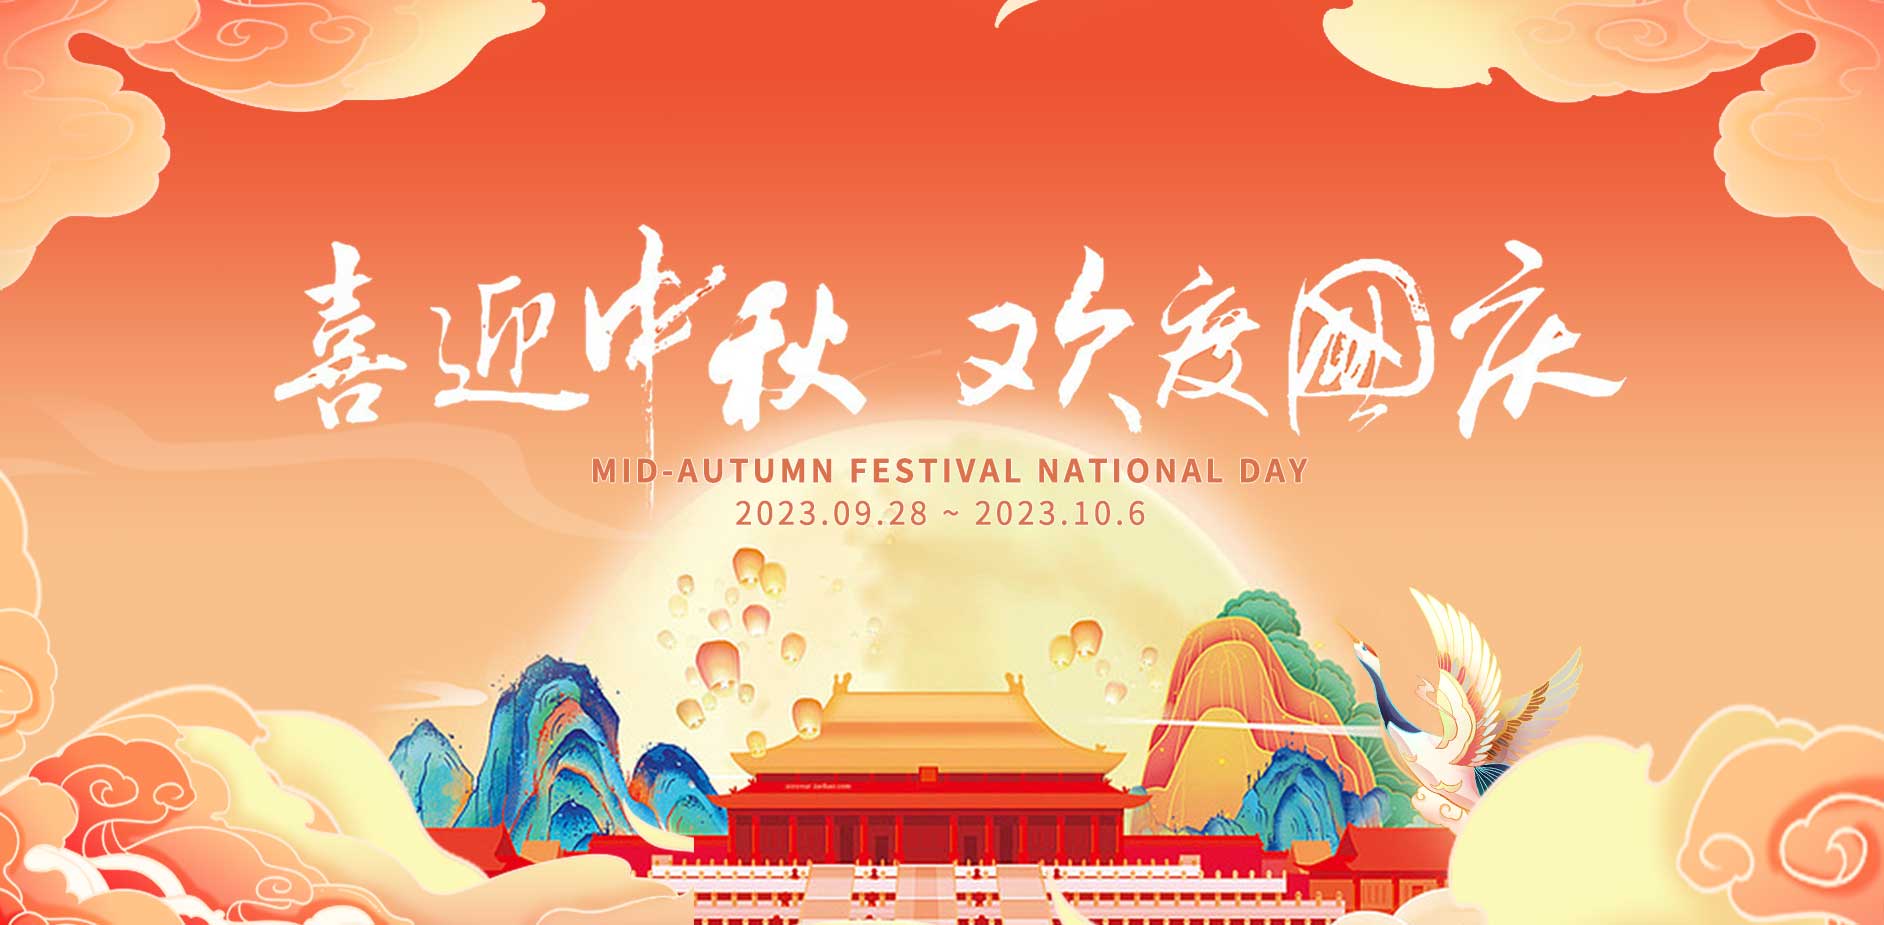 Dun Mid-Autumn Festival ati National Day!